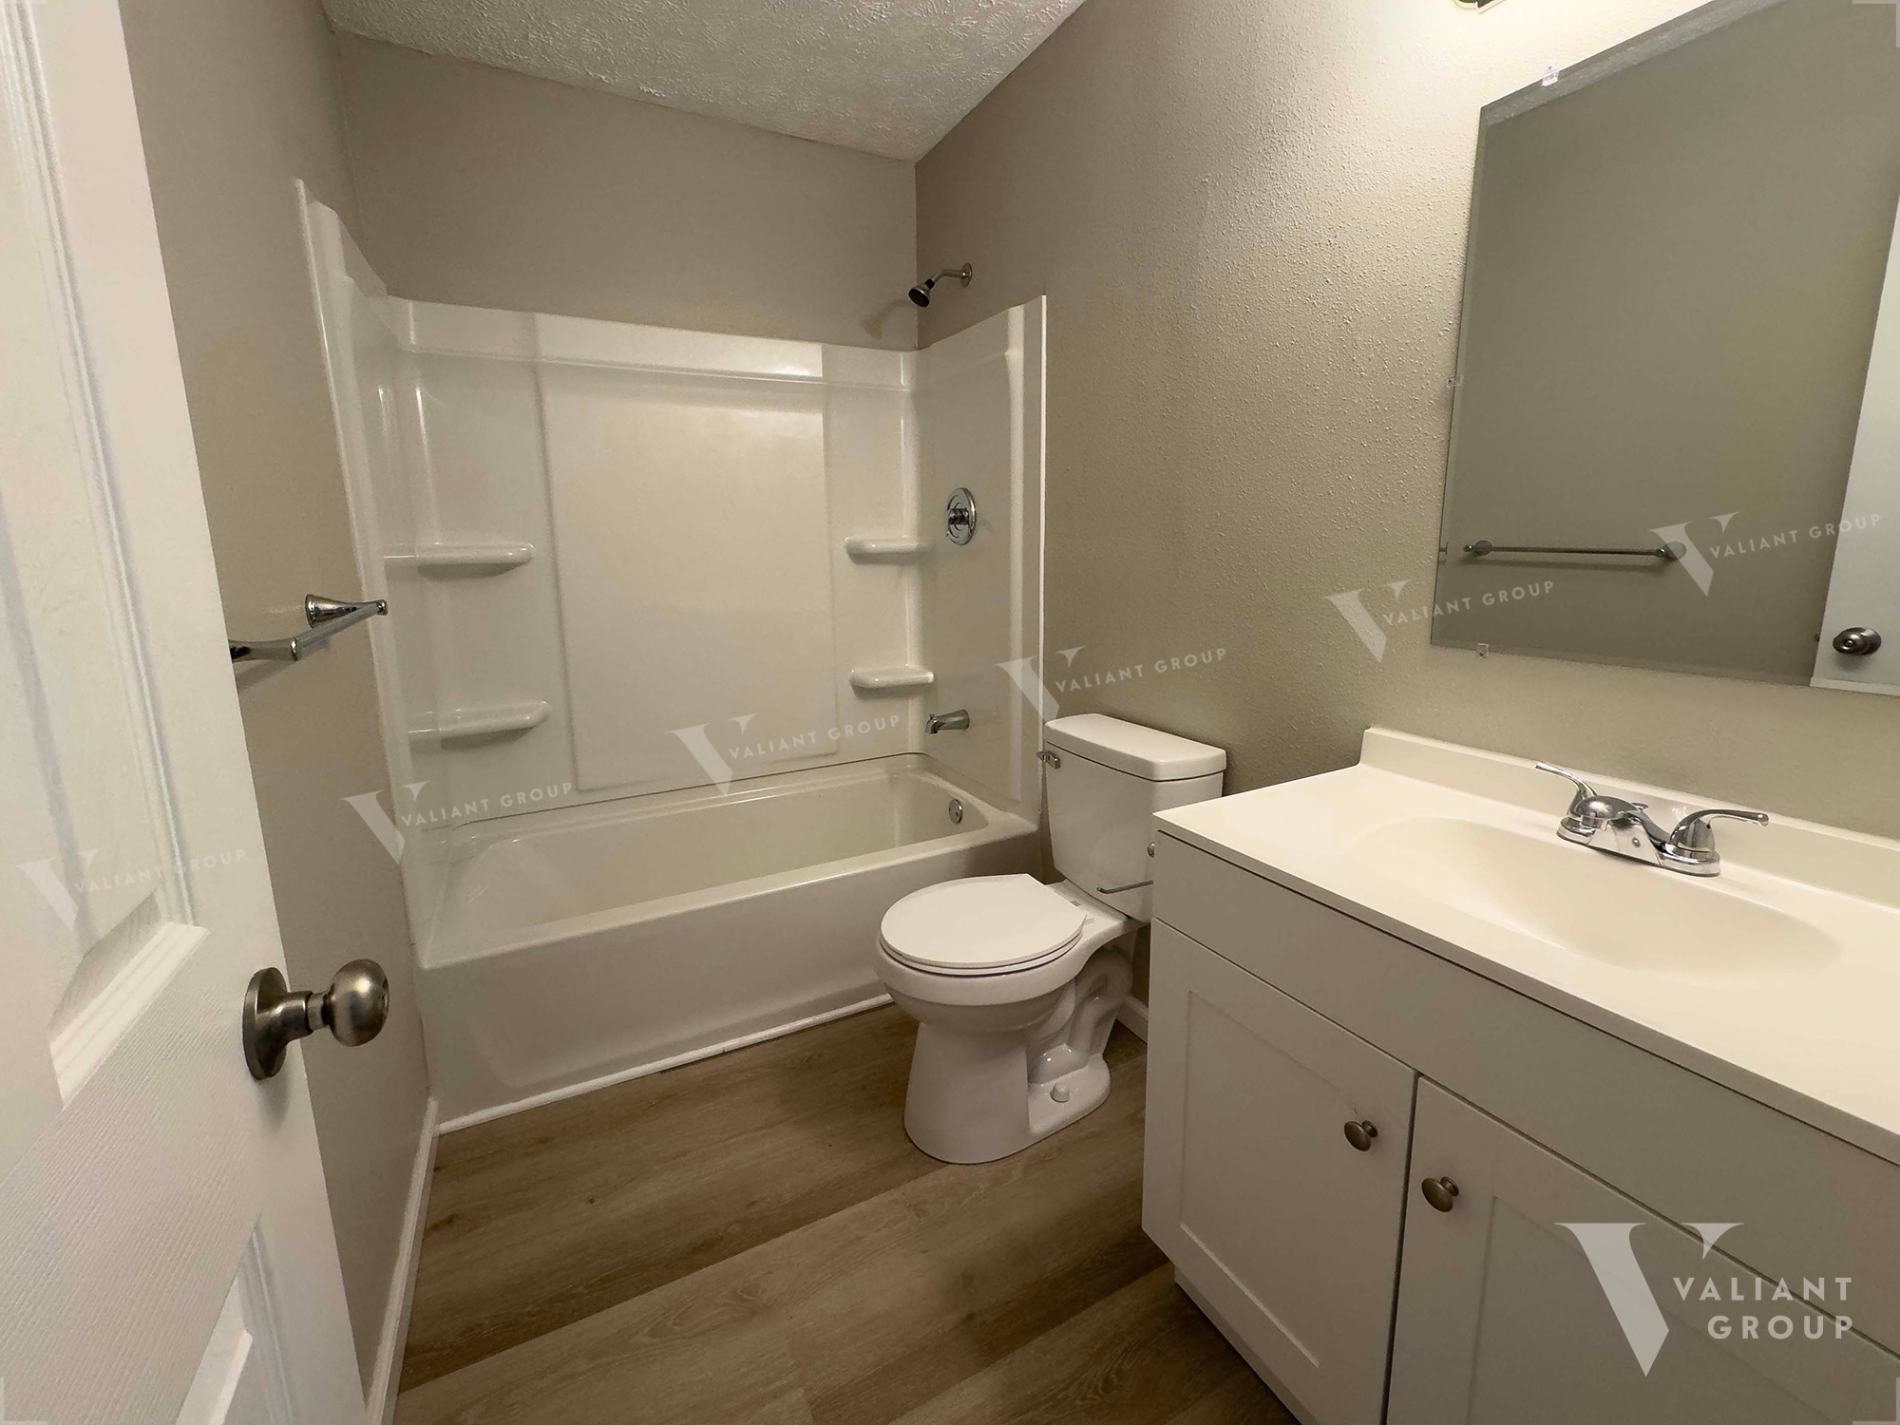 Rental-Apartment-2107-E-Cherry-St-Springfield-Mo-Unit-201--08-Bathroom.jpg